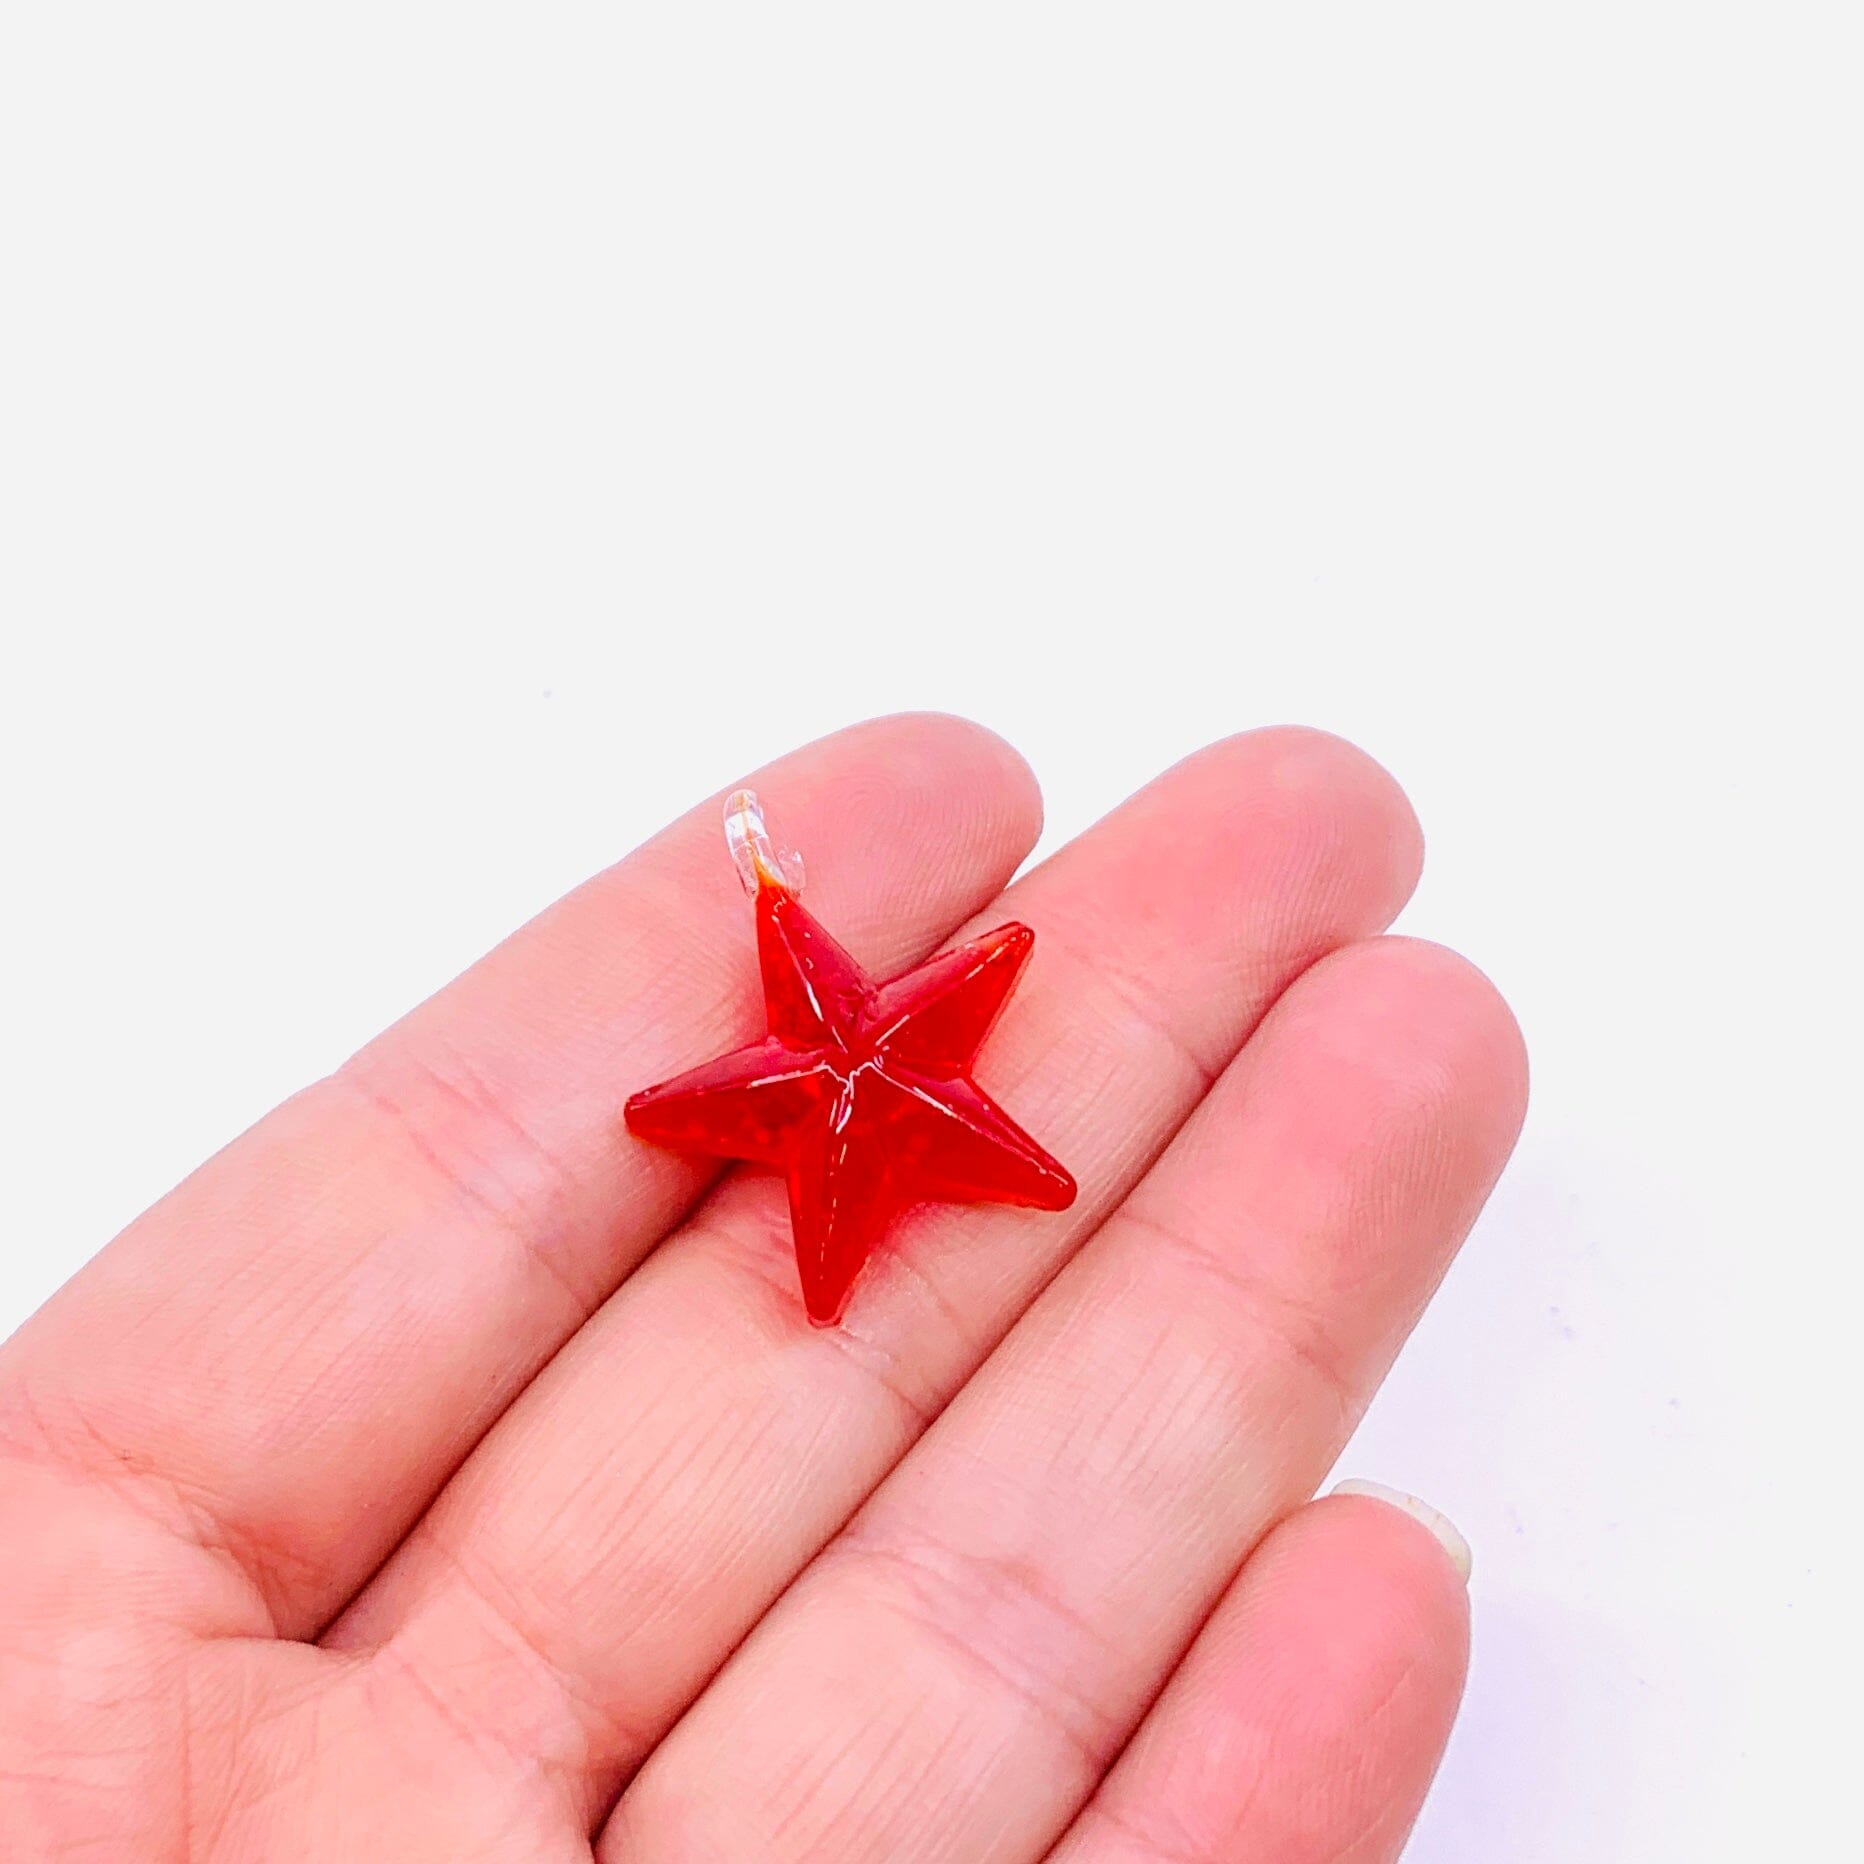 Glass Red Star Pendant Miniature - 